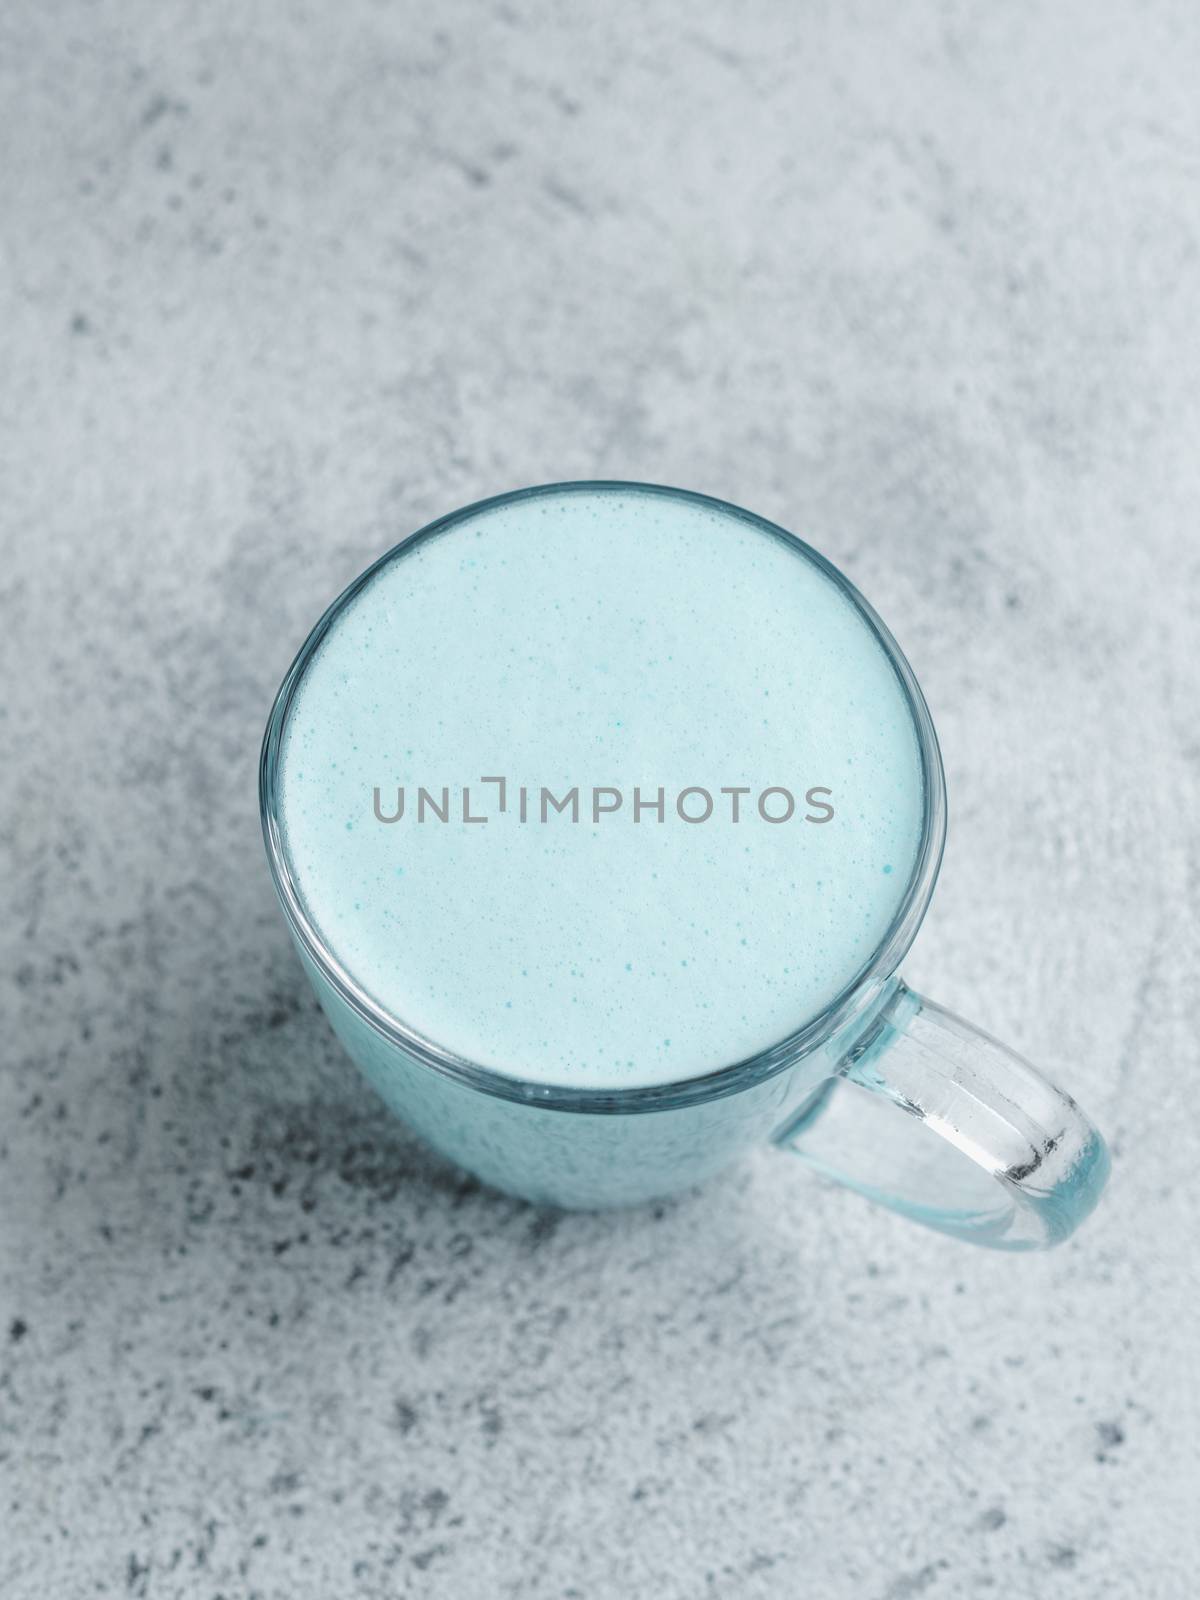 butterfly pea latte or blue spirulina latte by fascinadora